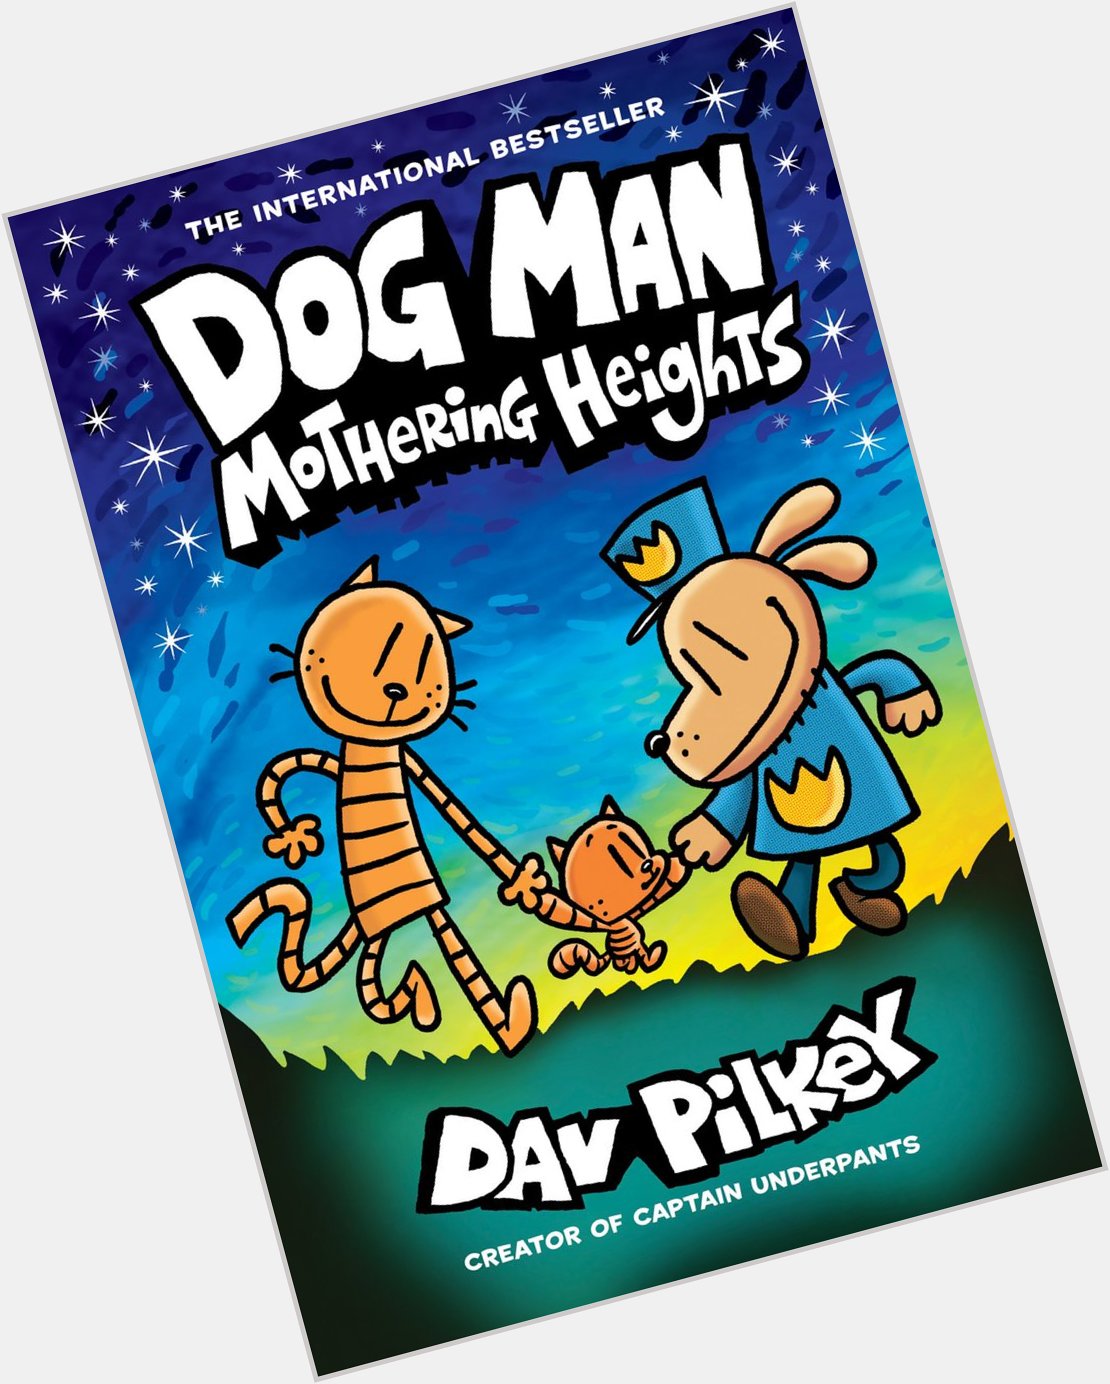 Happy book birthday to Dav Pilkey\s Dog Man: Mothering Heights! 